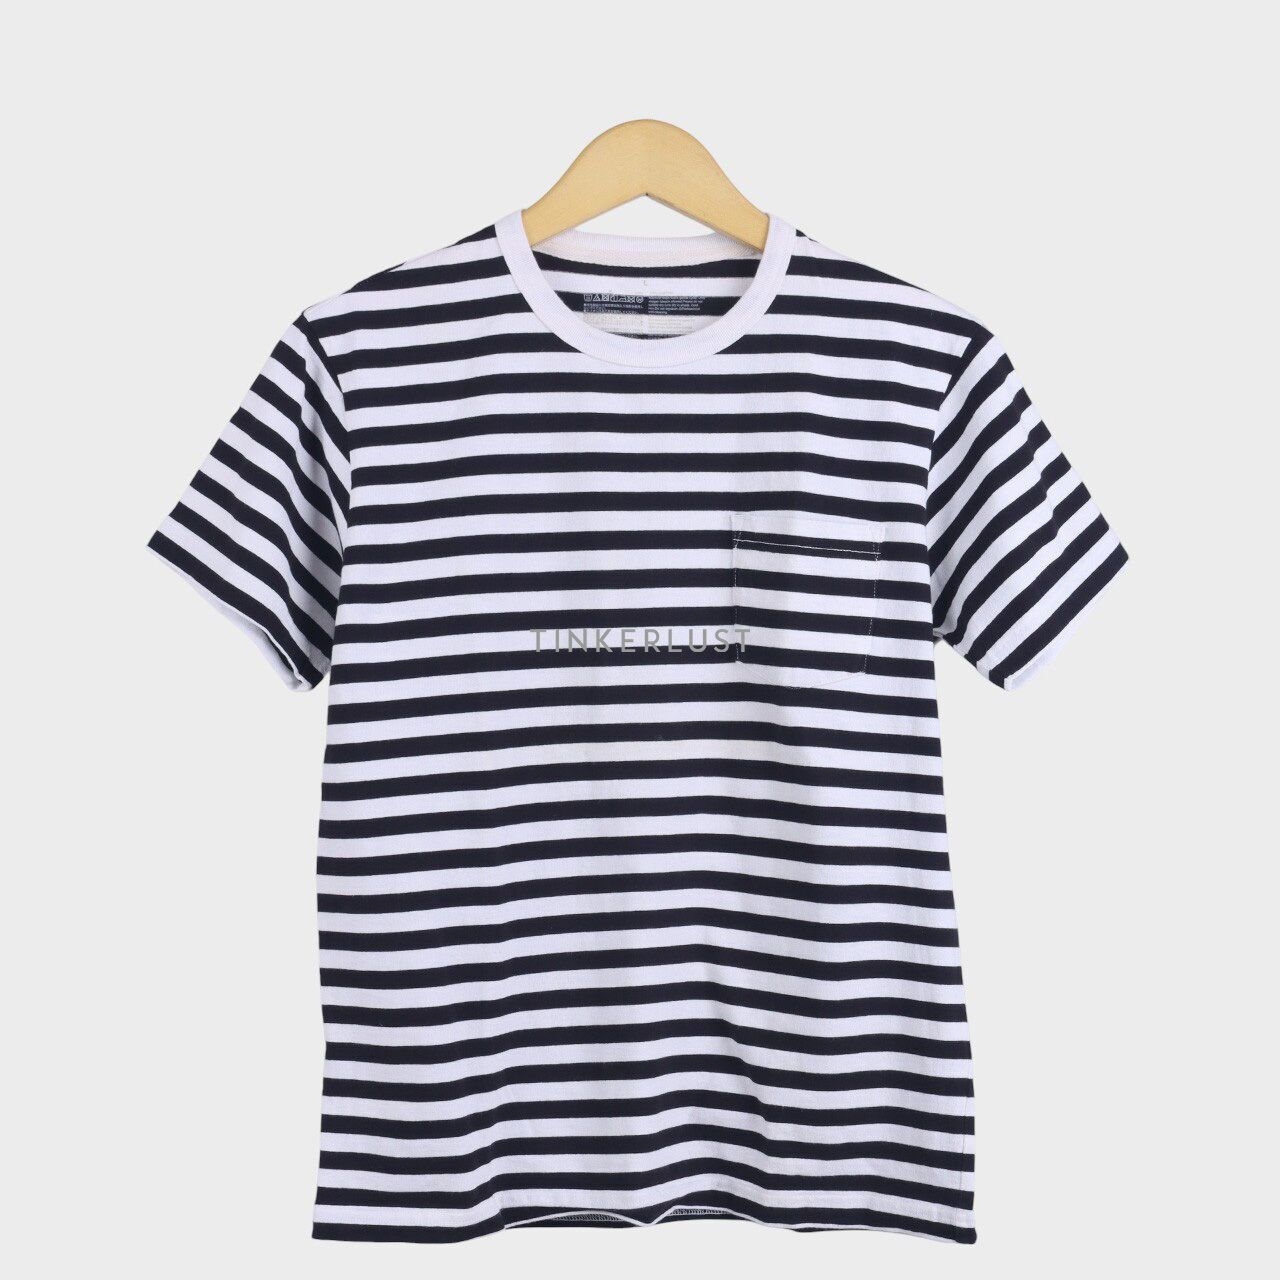 Muji Black & White Stripes T-shirt